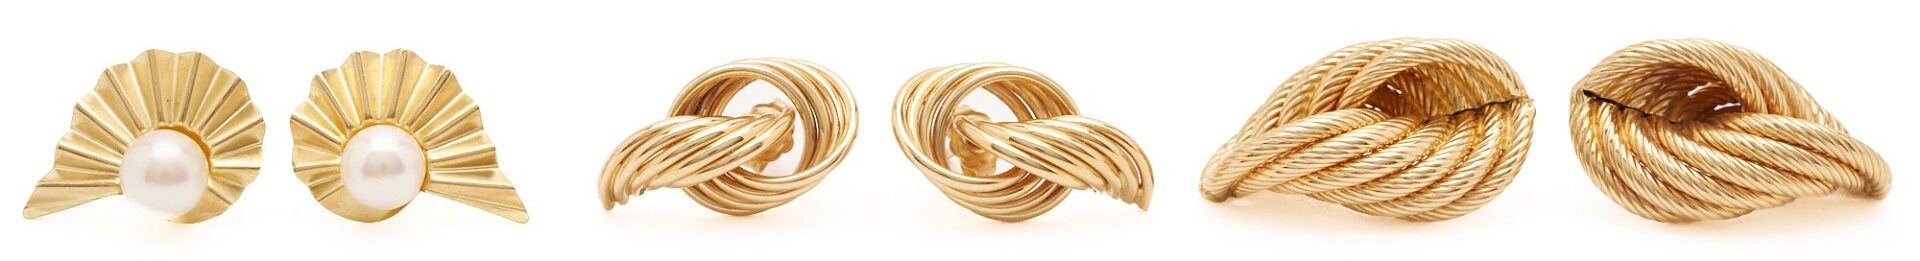 Lot 966: Three (3) 14K Gold Spiral Earrings